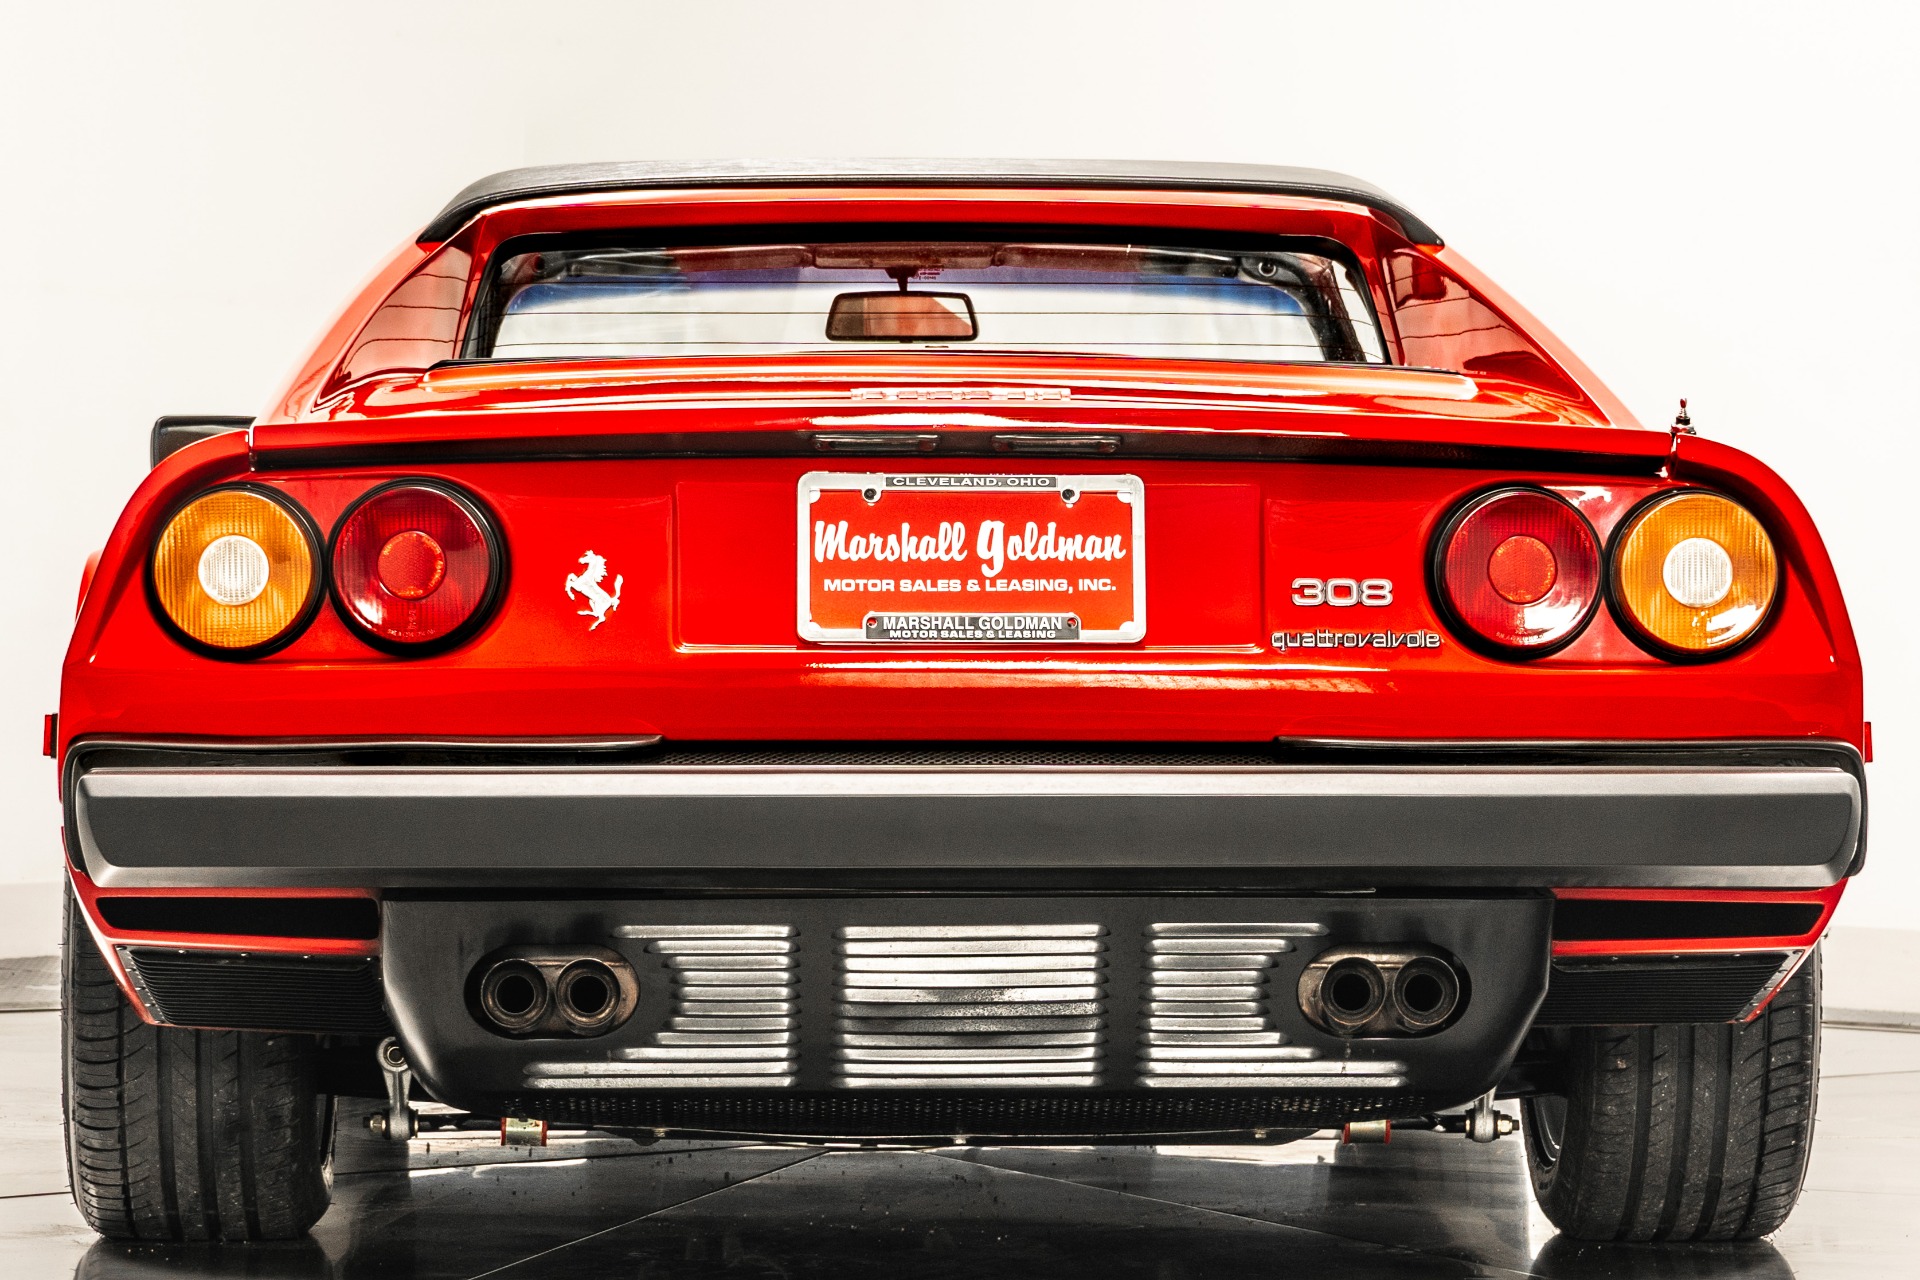 Ferrari: 308 GTS Quattrovalvole at a bargain price - AutoSprintCH